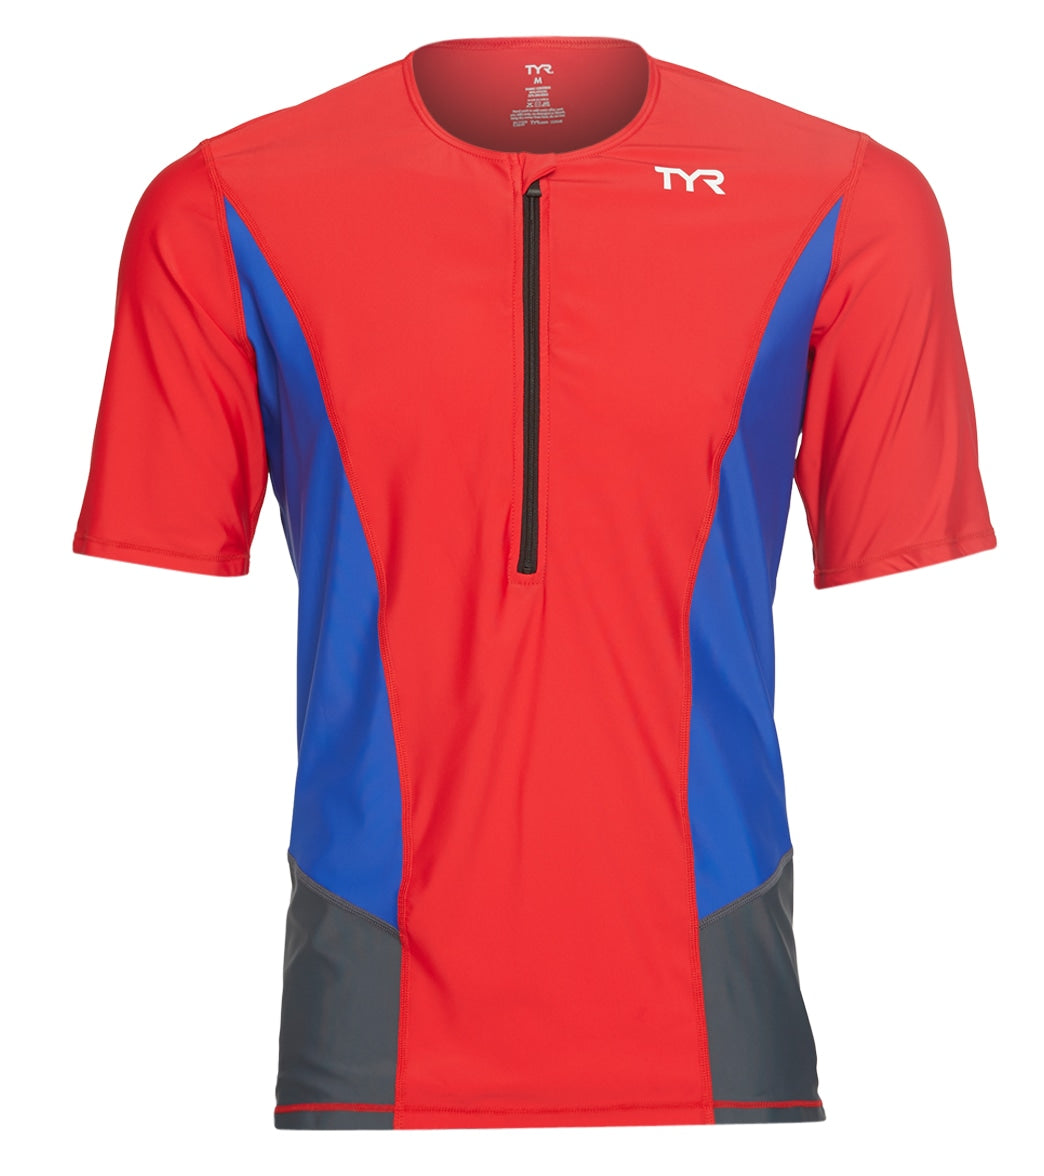 TYR Men's Competitor Short Sleeve Top - Red/Blue/Grey Medium Size Medium - Swimoutlet.com